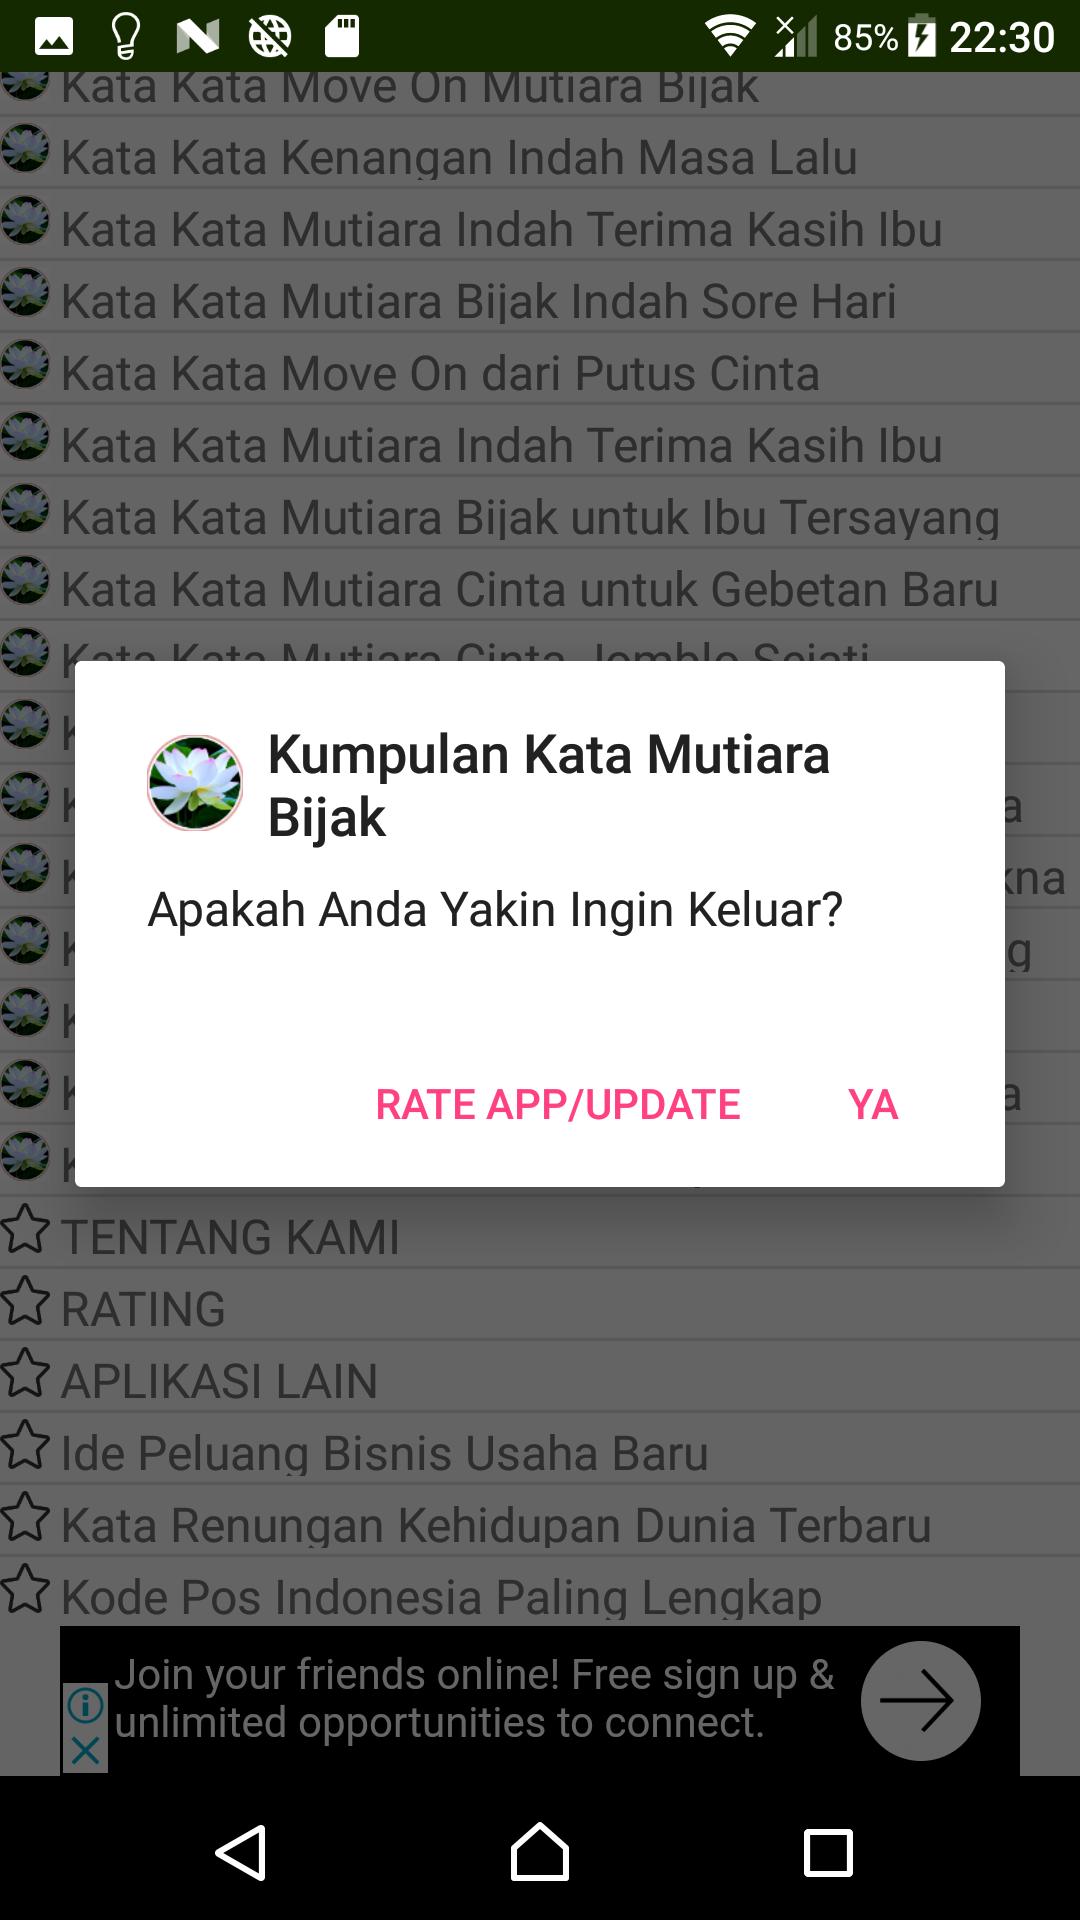 Kumpulan Kata Mutiara Bijak For Android Apk Download